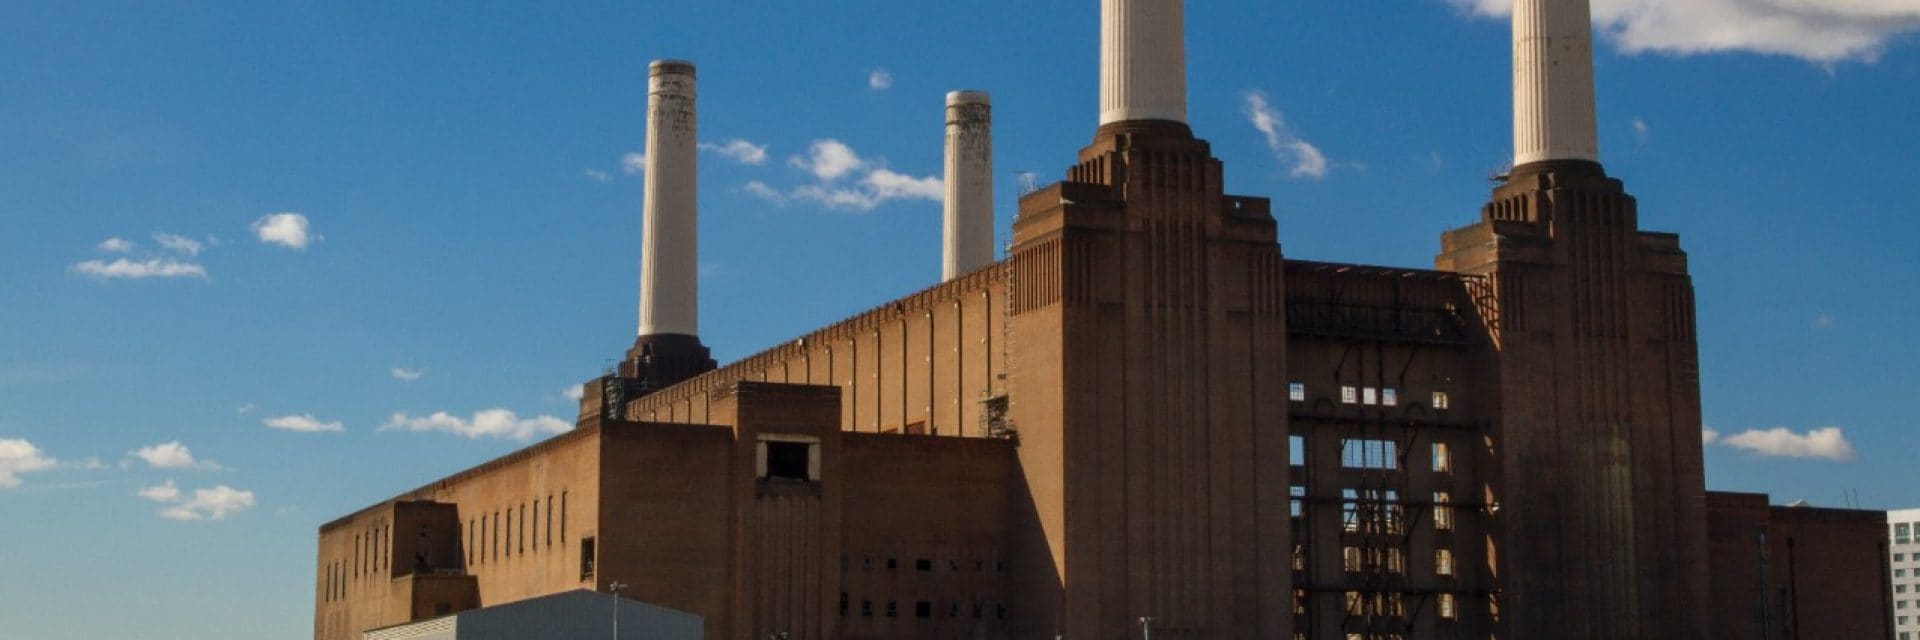 Hilti Battersea power station London UK